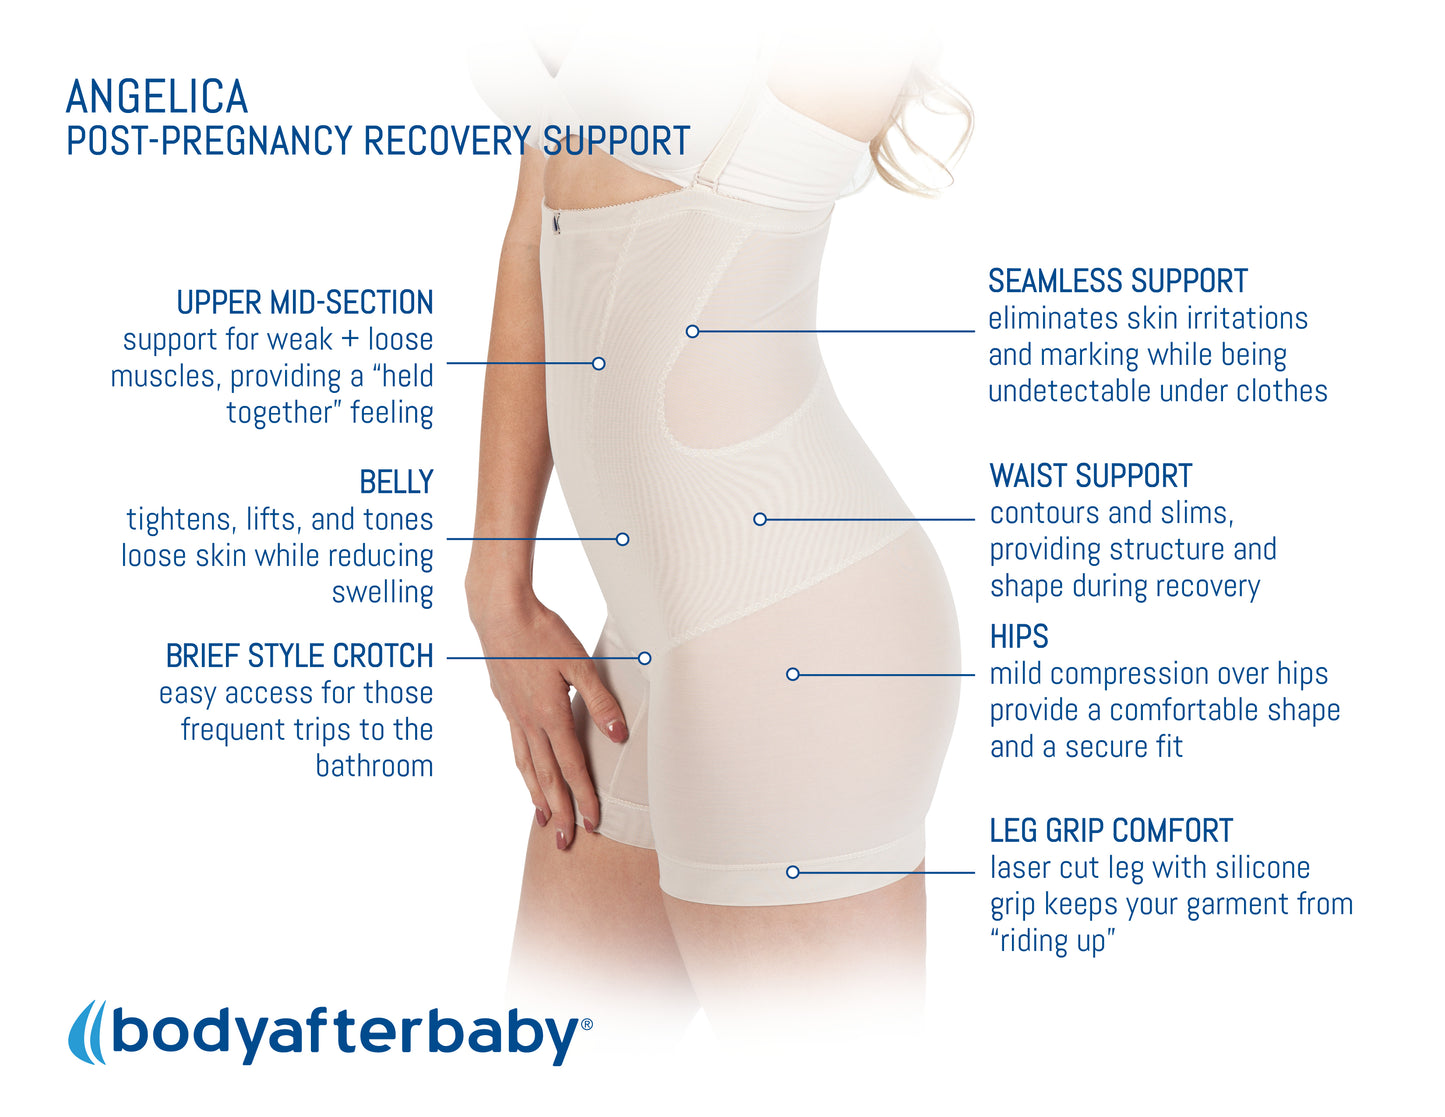 
                  
                    ANGELICA Postpartum Recovery Garment
                  
                